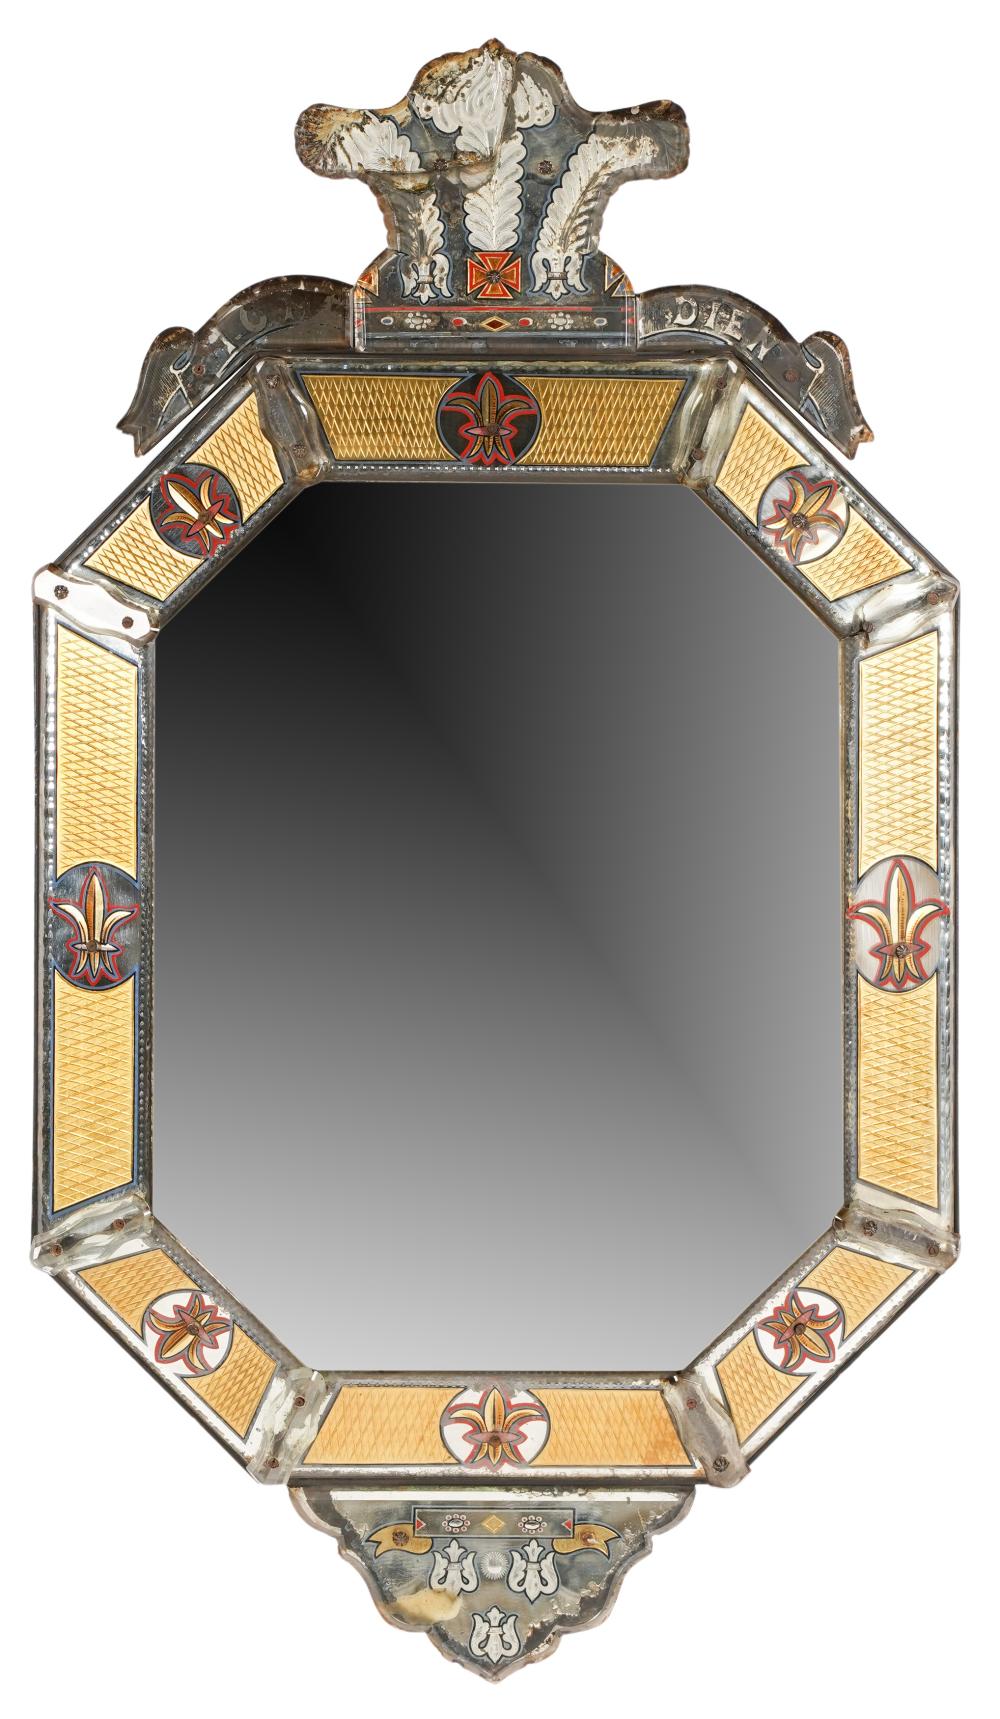 VENETIAN GLASS WALL MIRRORthe mirror